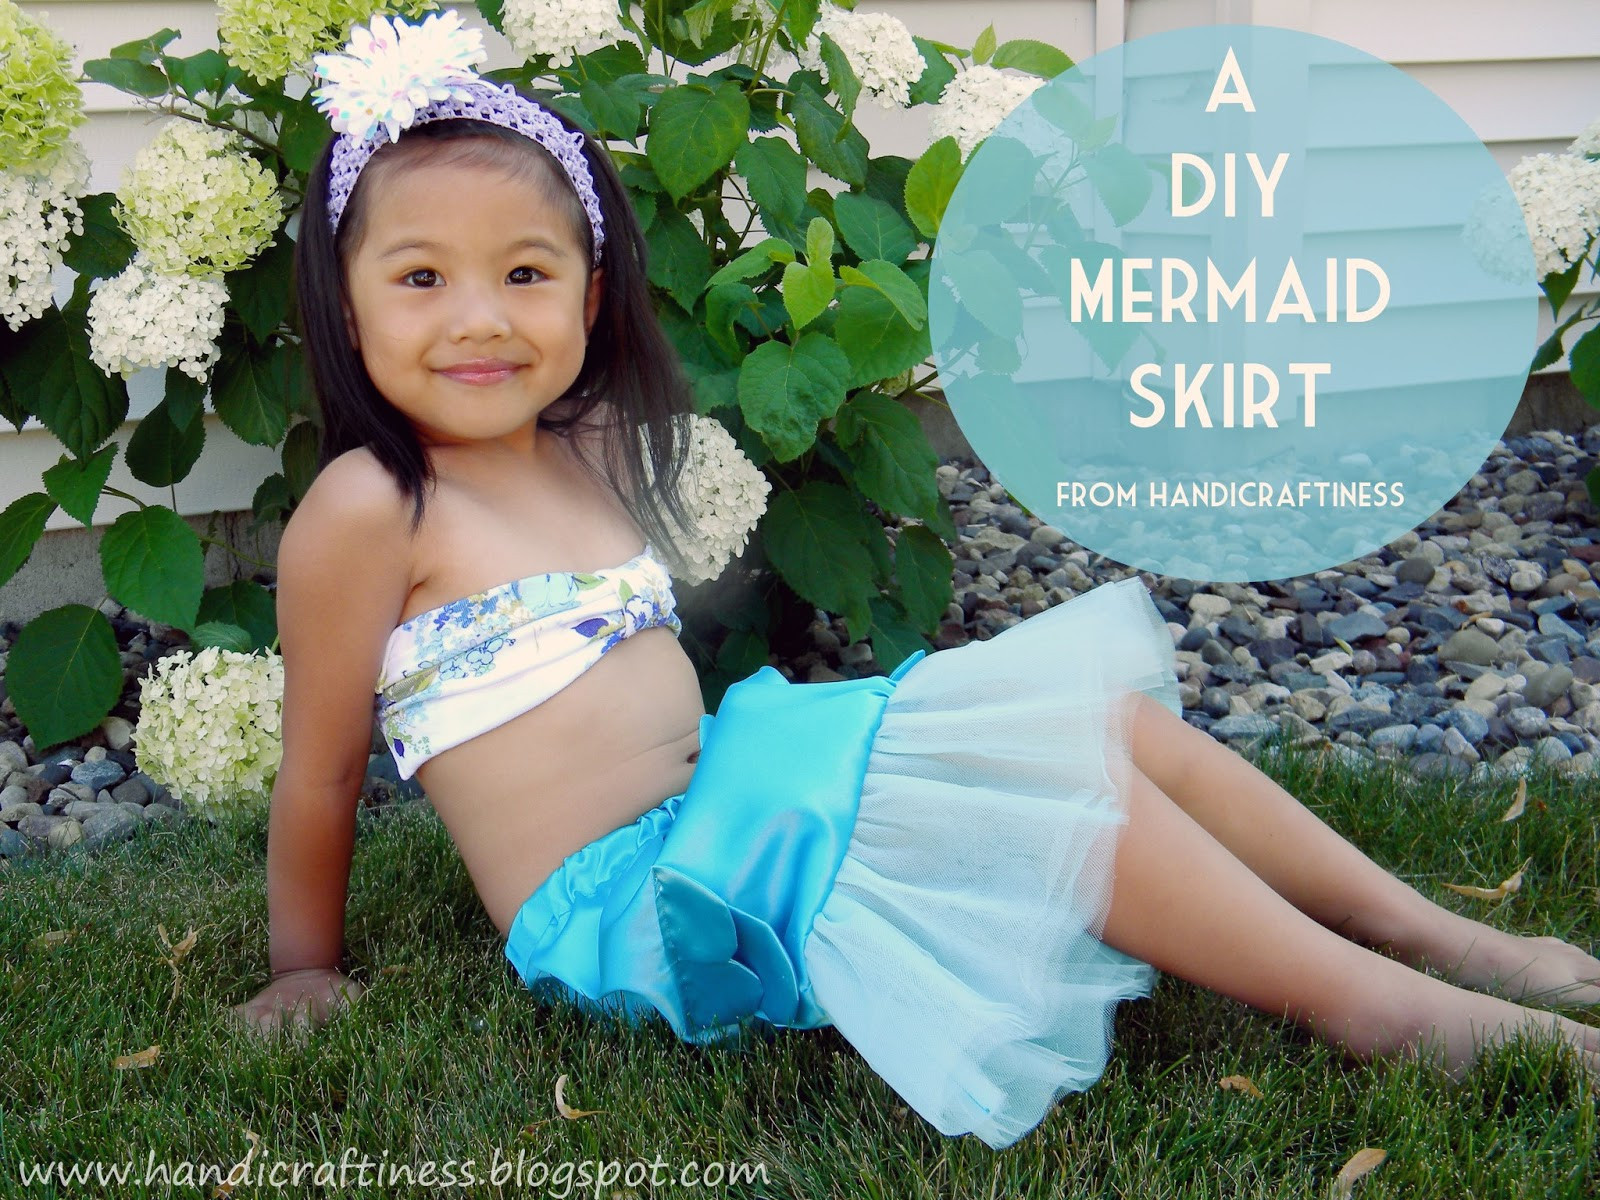 DIY Mermaid Skirt Costume
 The Pretty Kitty Studio A DIY Mermaid Skirt